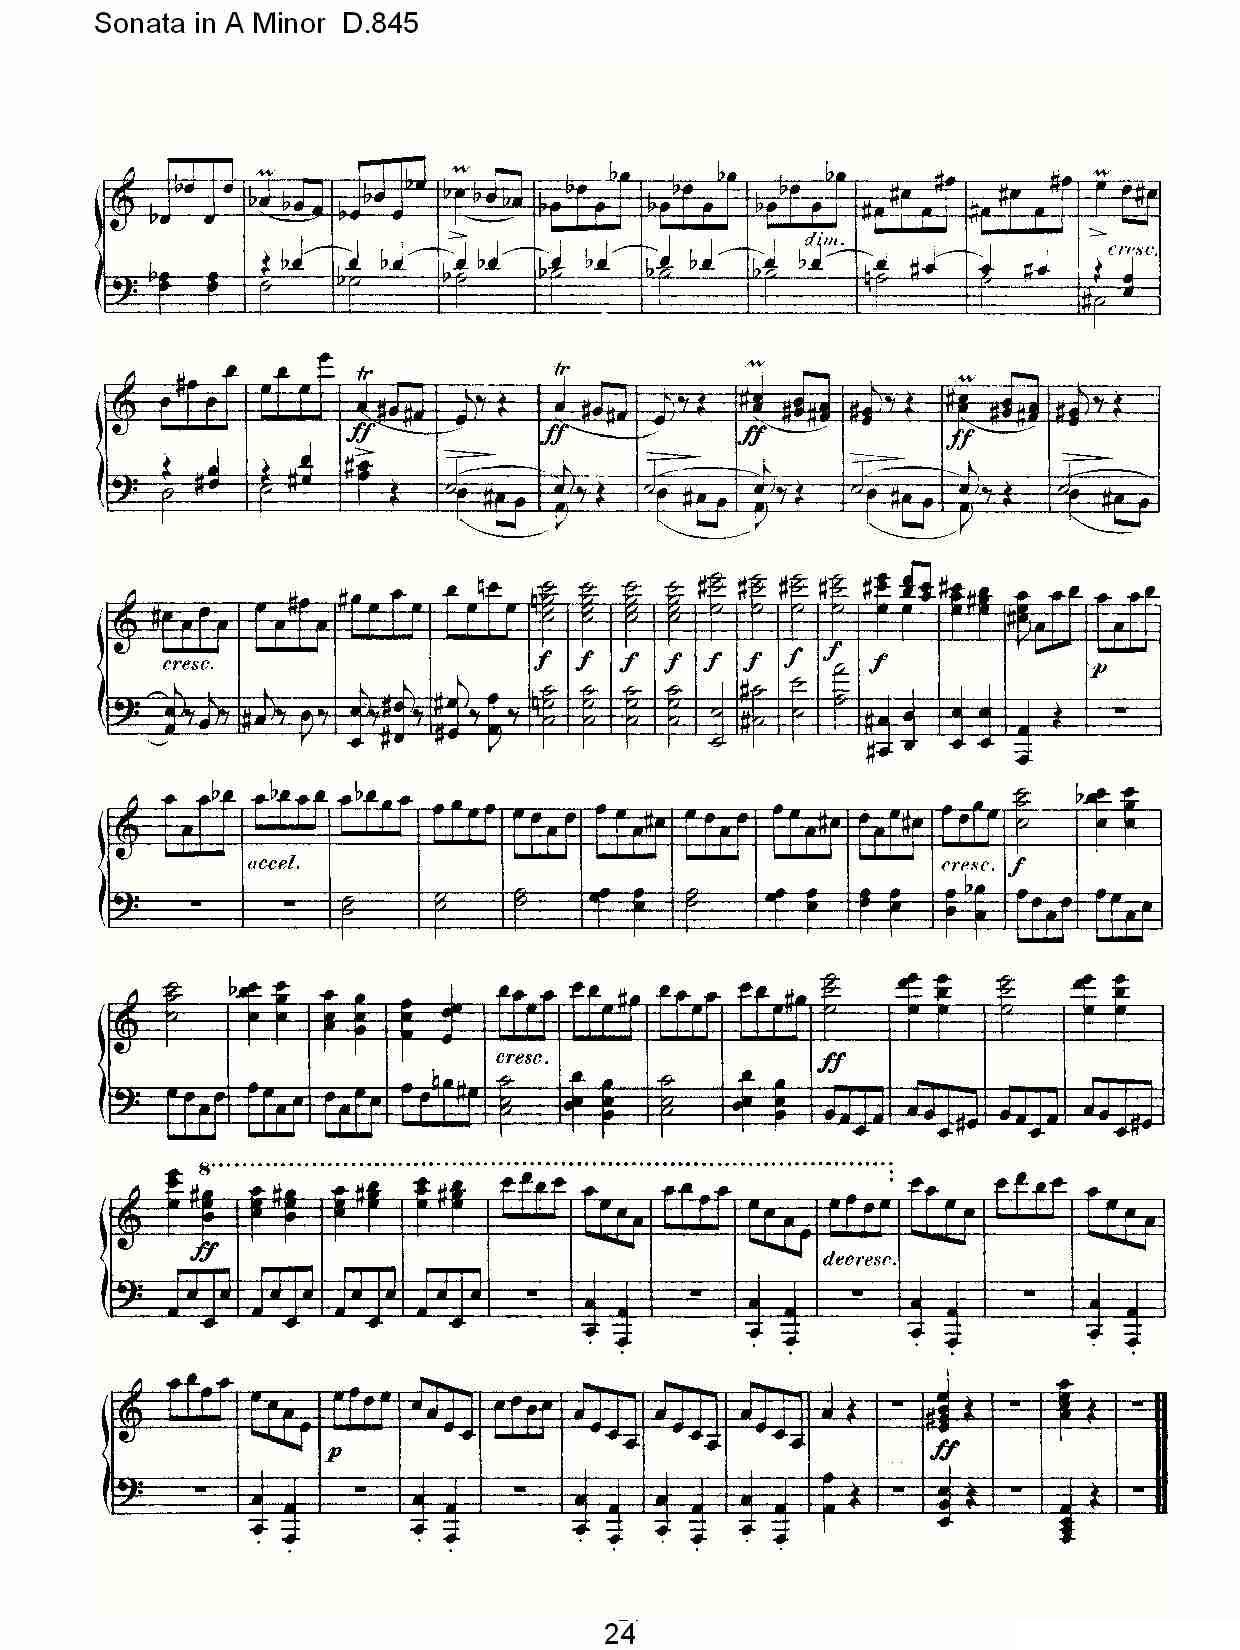 Sonata in A Minor D.845（A小调奏鸣曲 D.845）钢琴曲谱（图24）